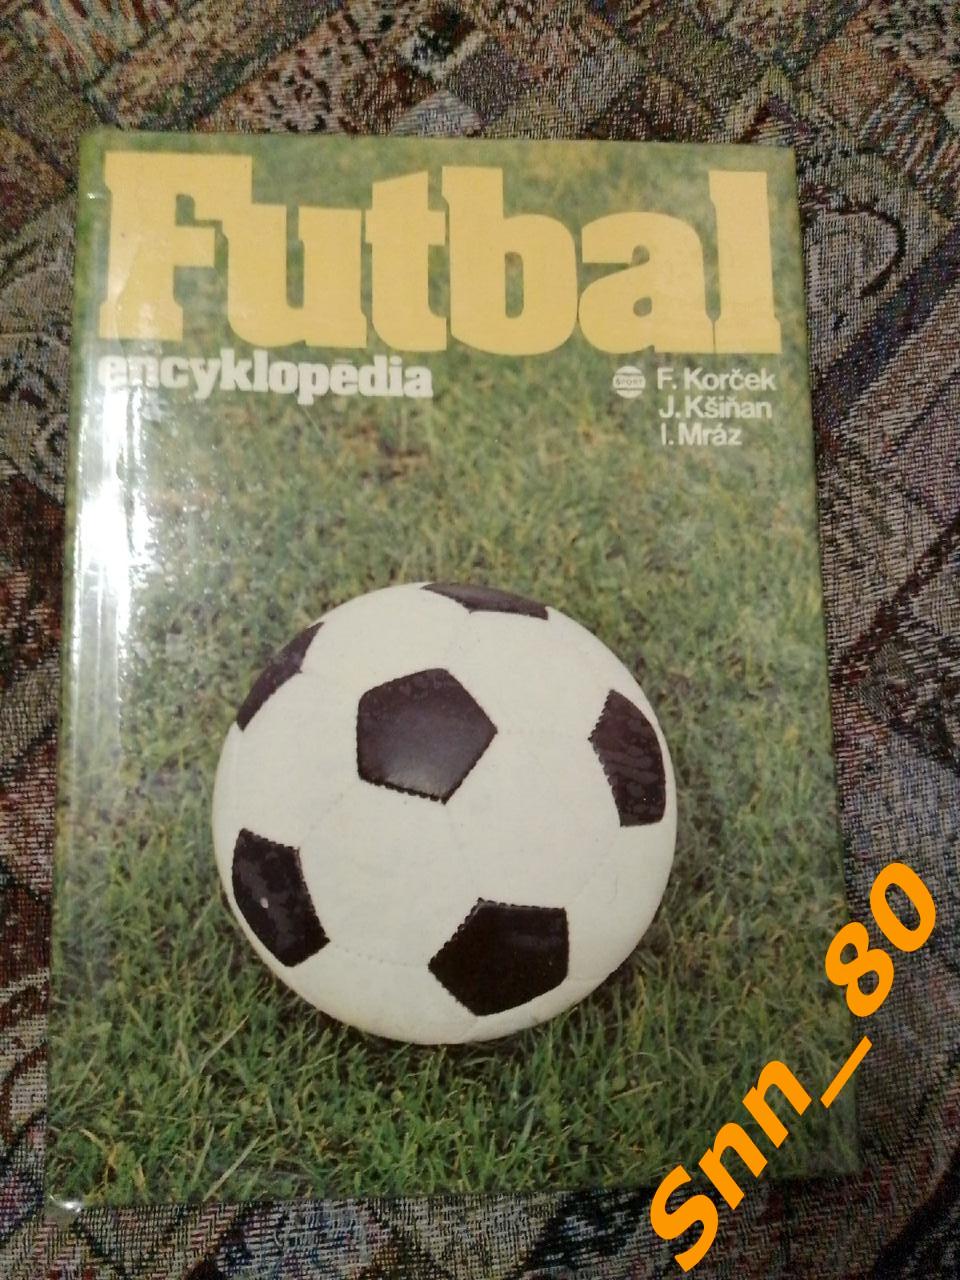 6 Энциклопедия футбола Futbal encyklopedia 1986 F.Korcek J.Ksinan I.Mraz